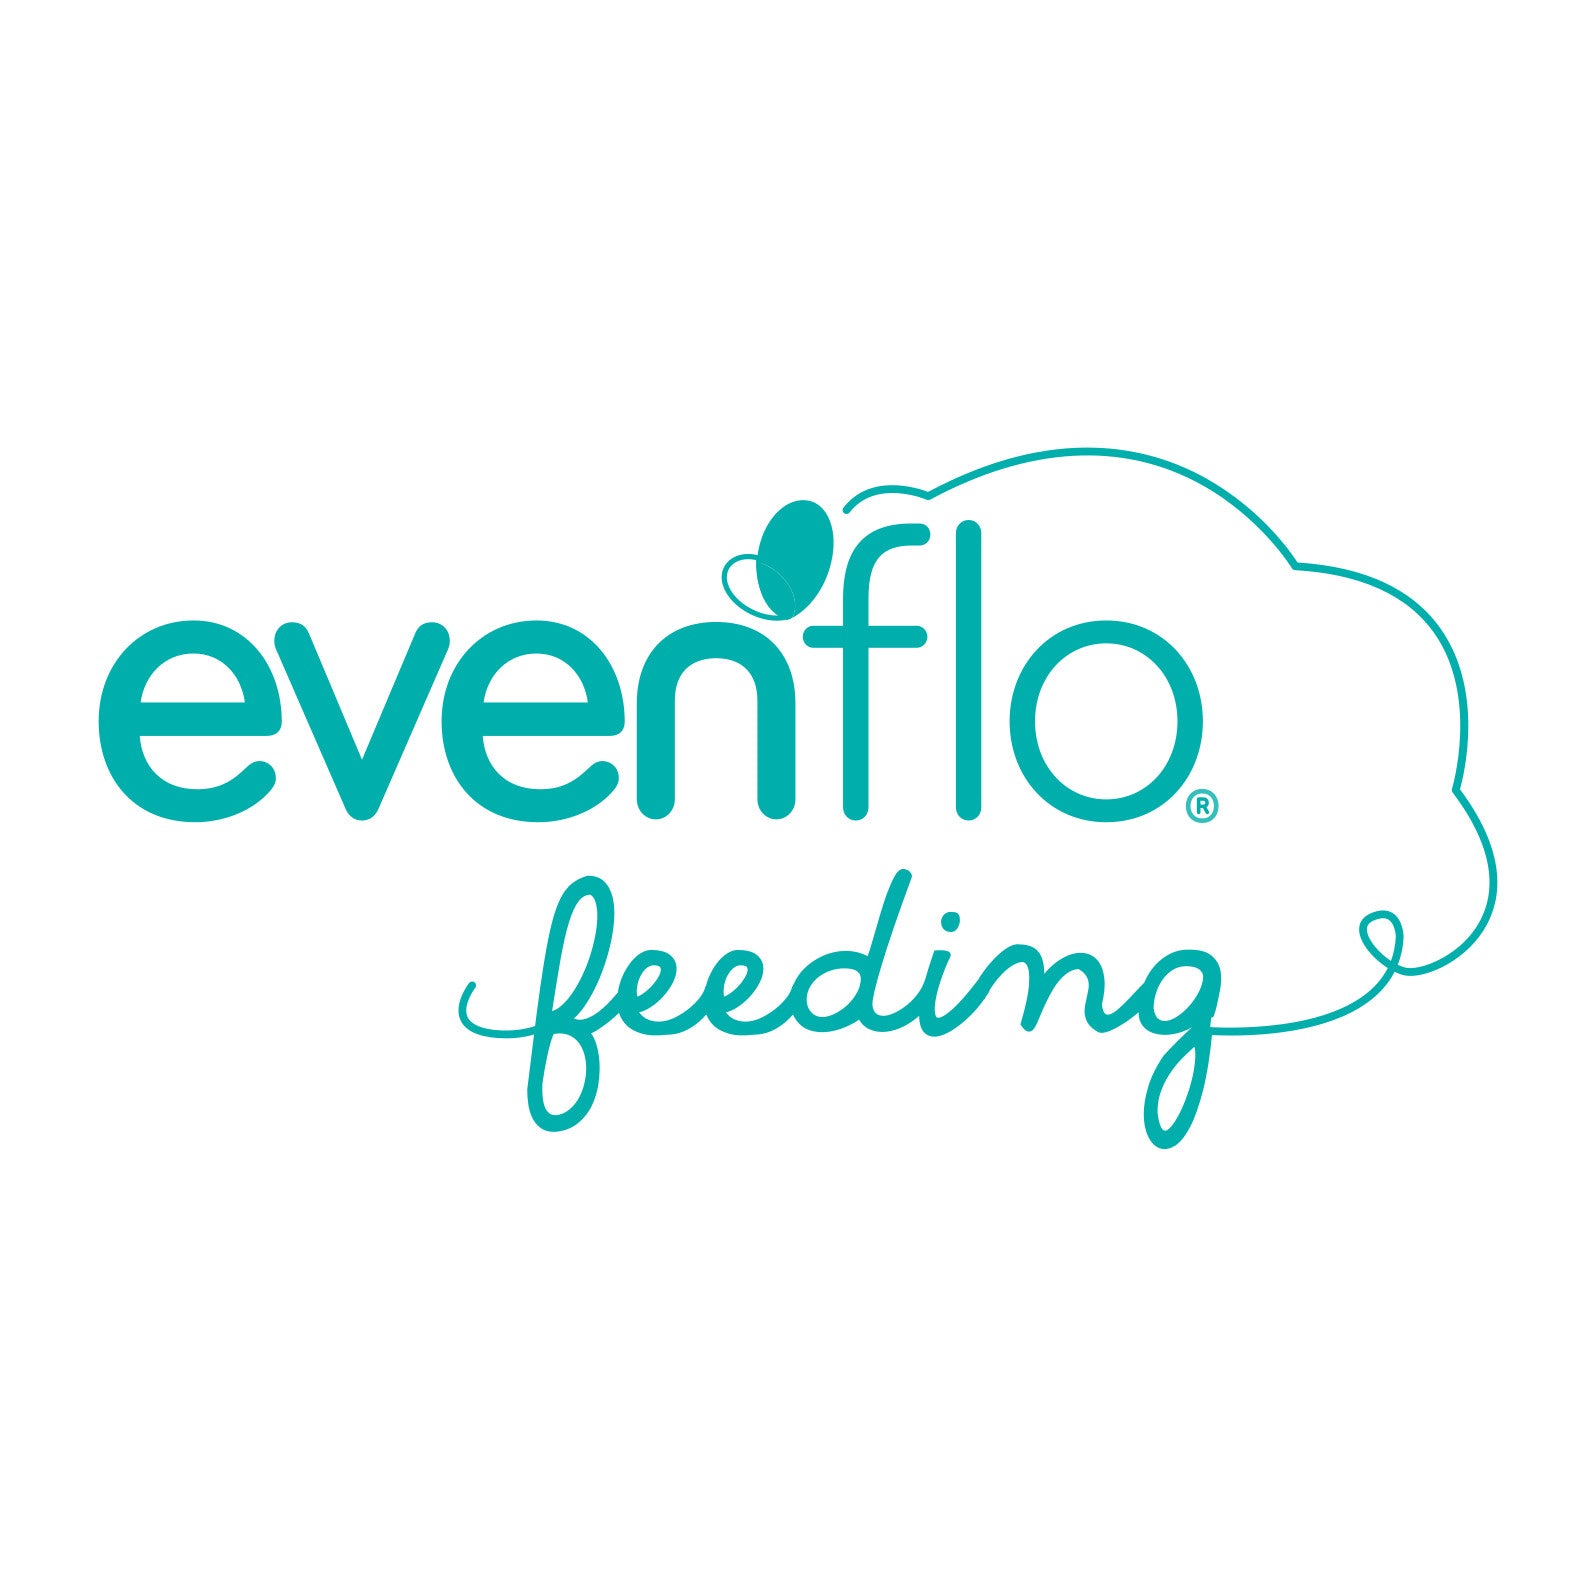 Evenflo Feeding